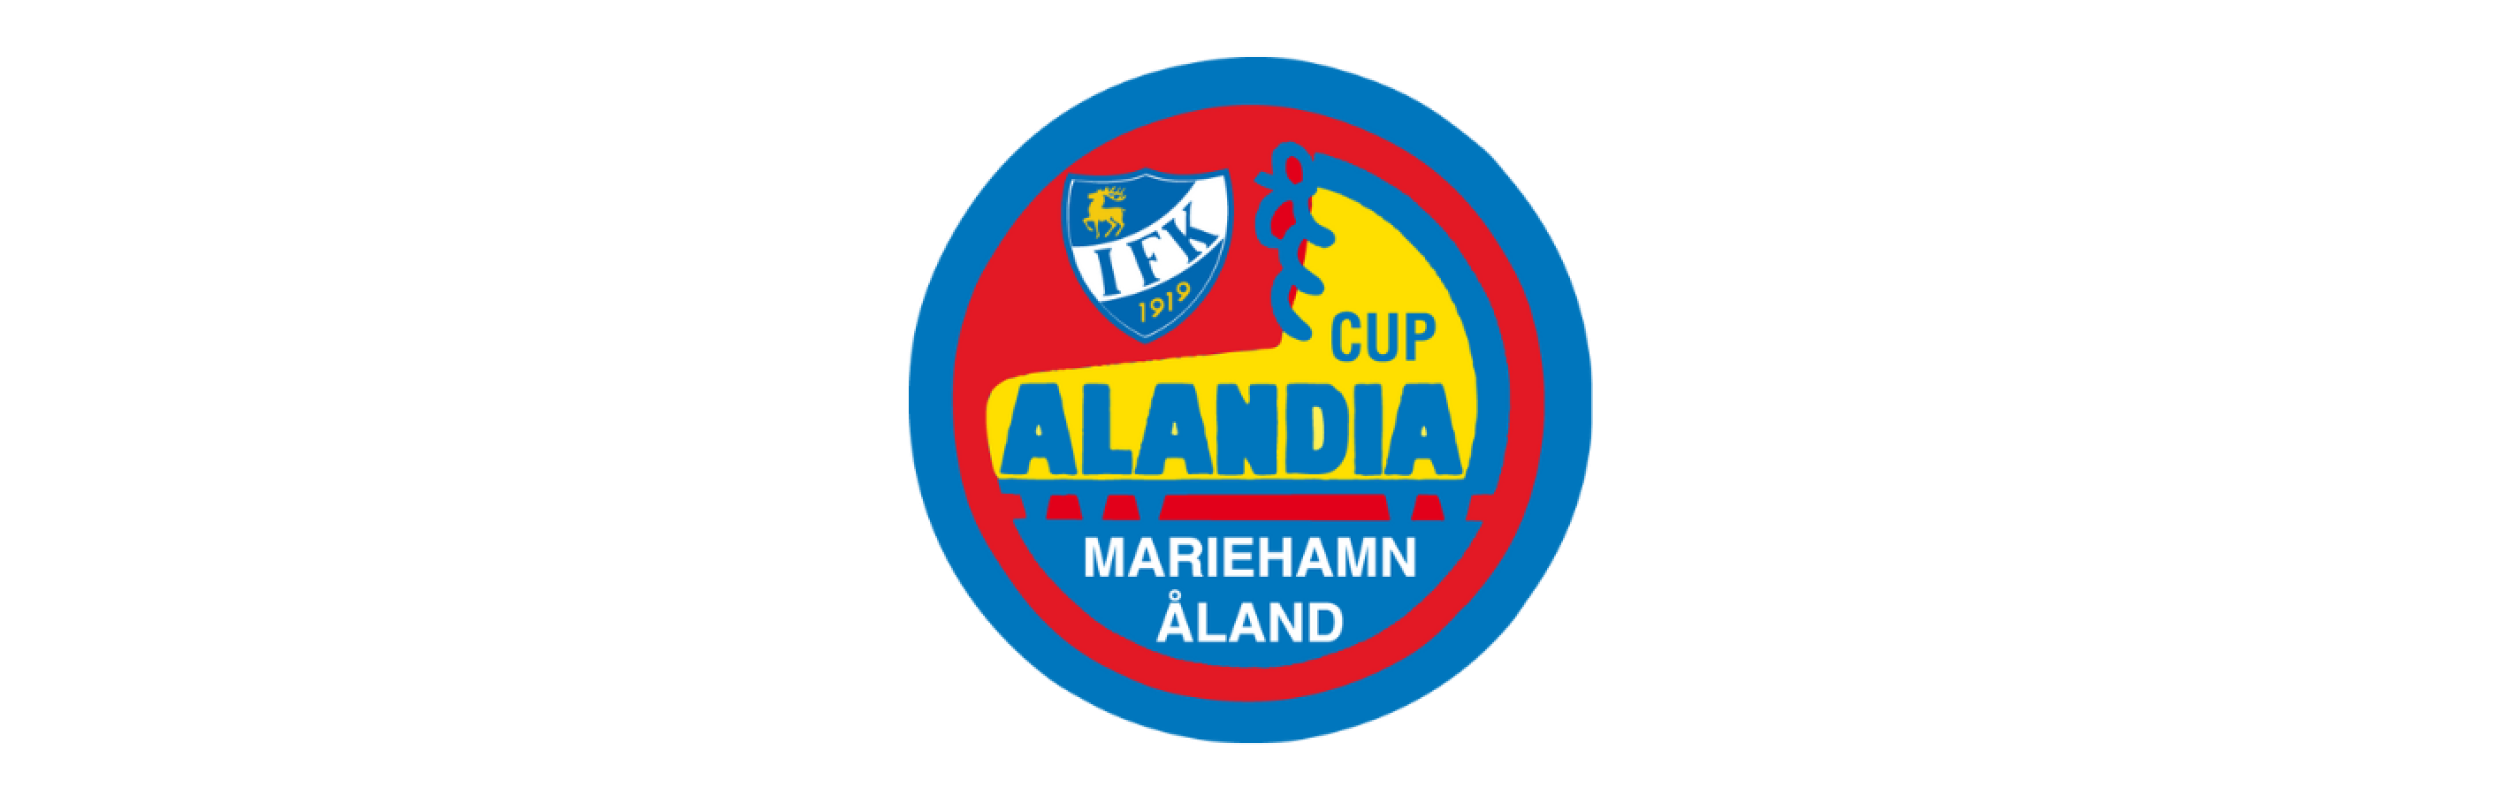 Alandia Cup logo puff